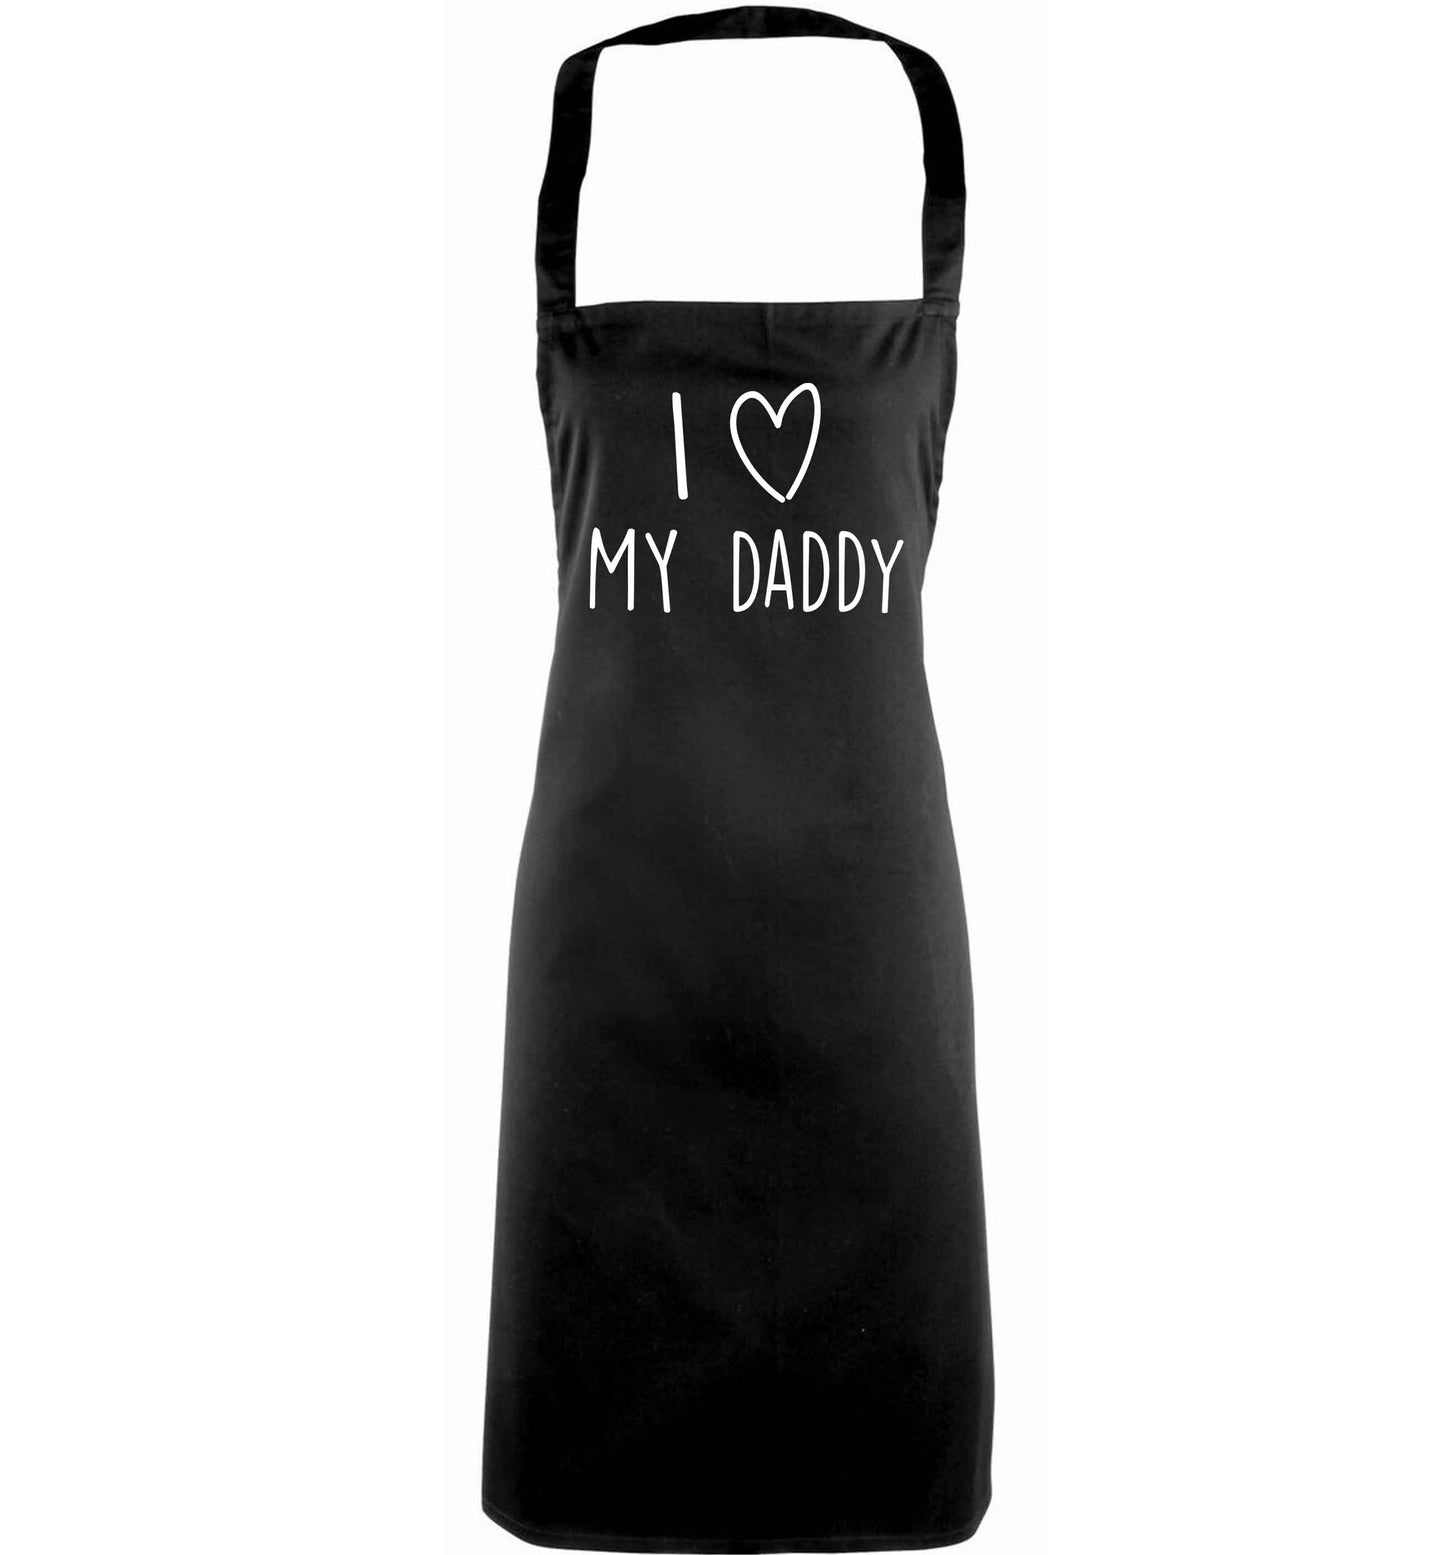 I love my daddy adults black apron